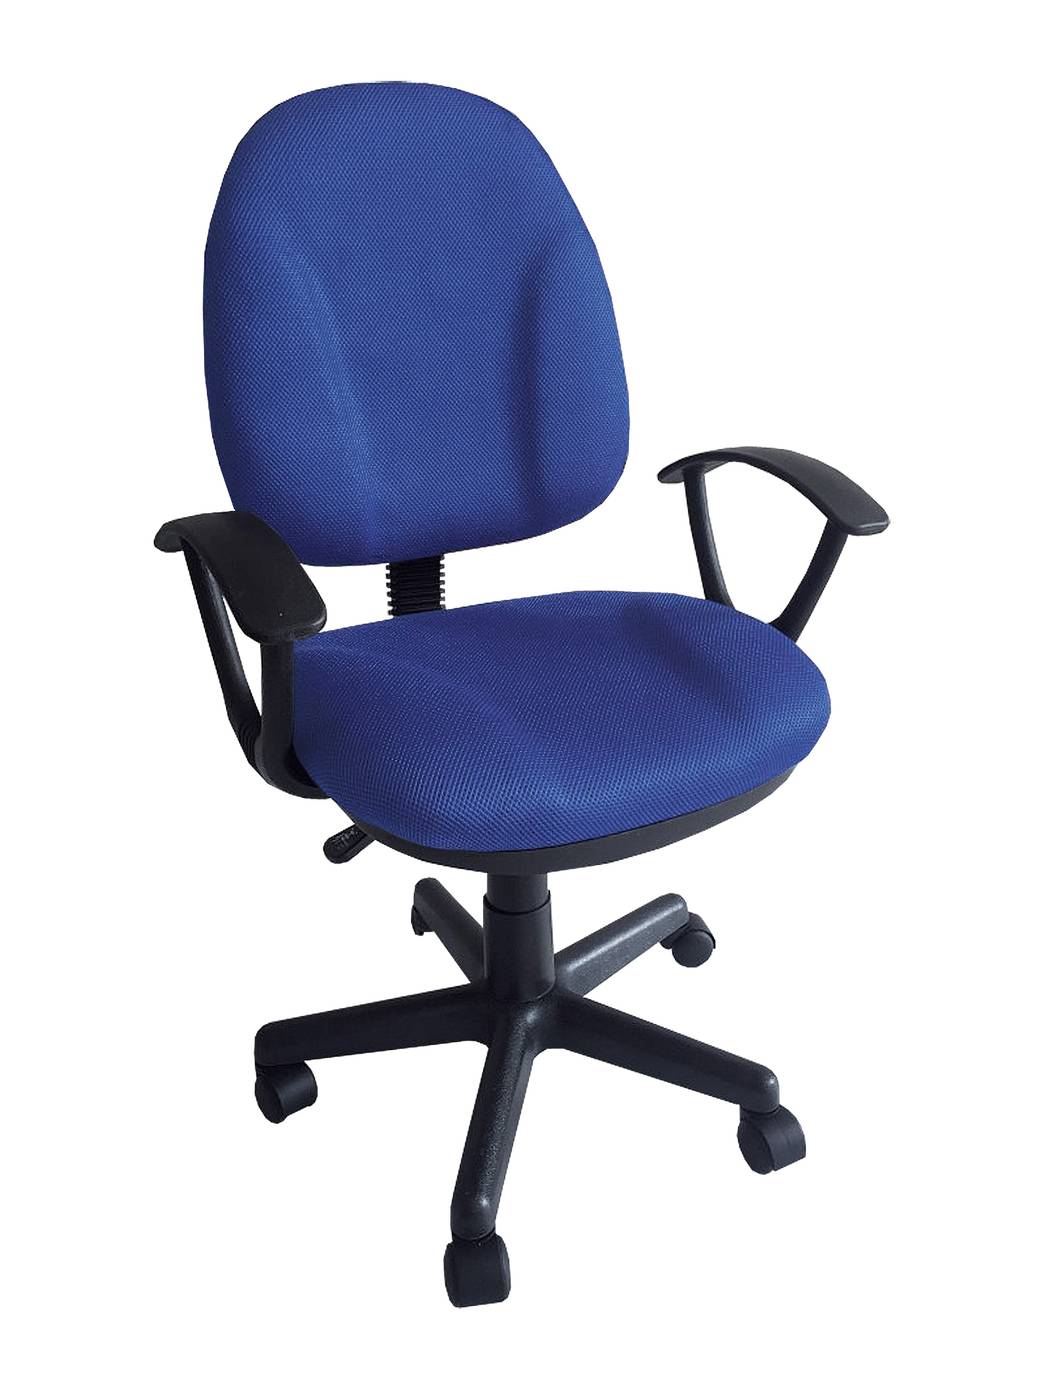 Silla giratoria para escritorio juvenil, con ruedas, elevable, con asiento y respaldo tapizado con tejido 3D color azul